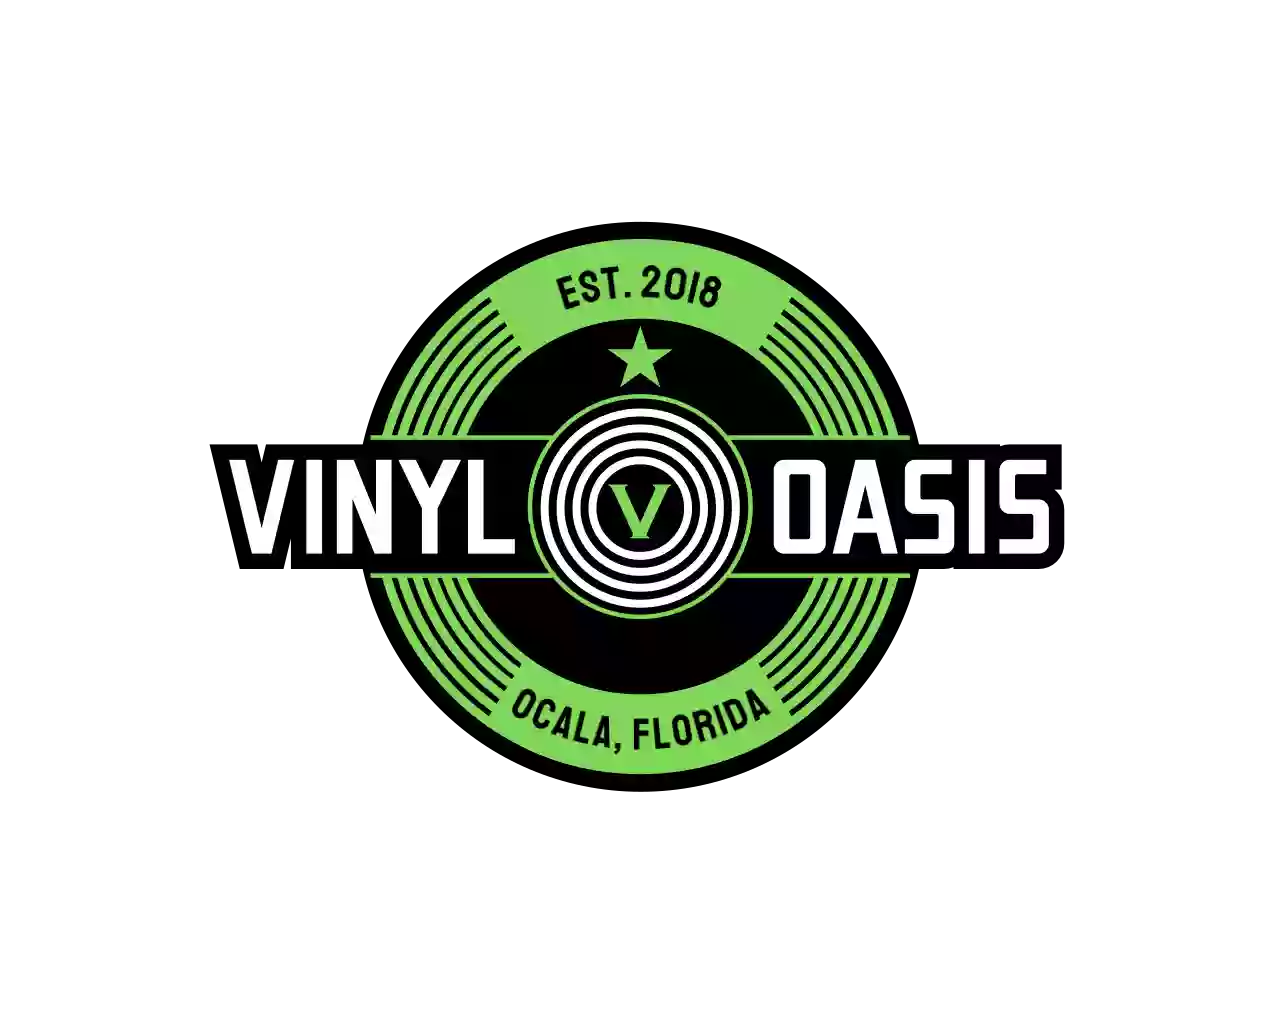 Vinyl Oasis